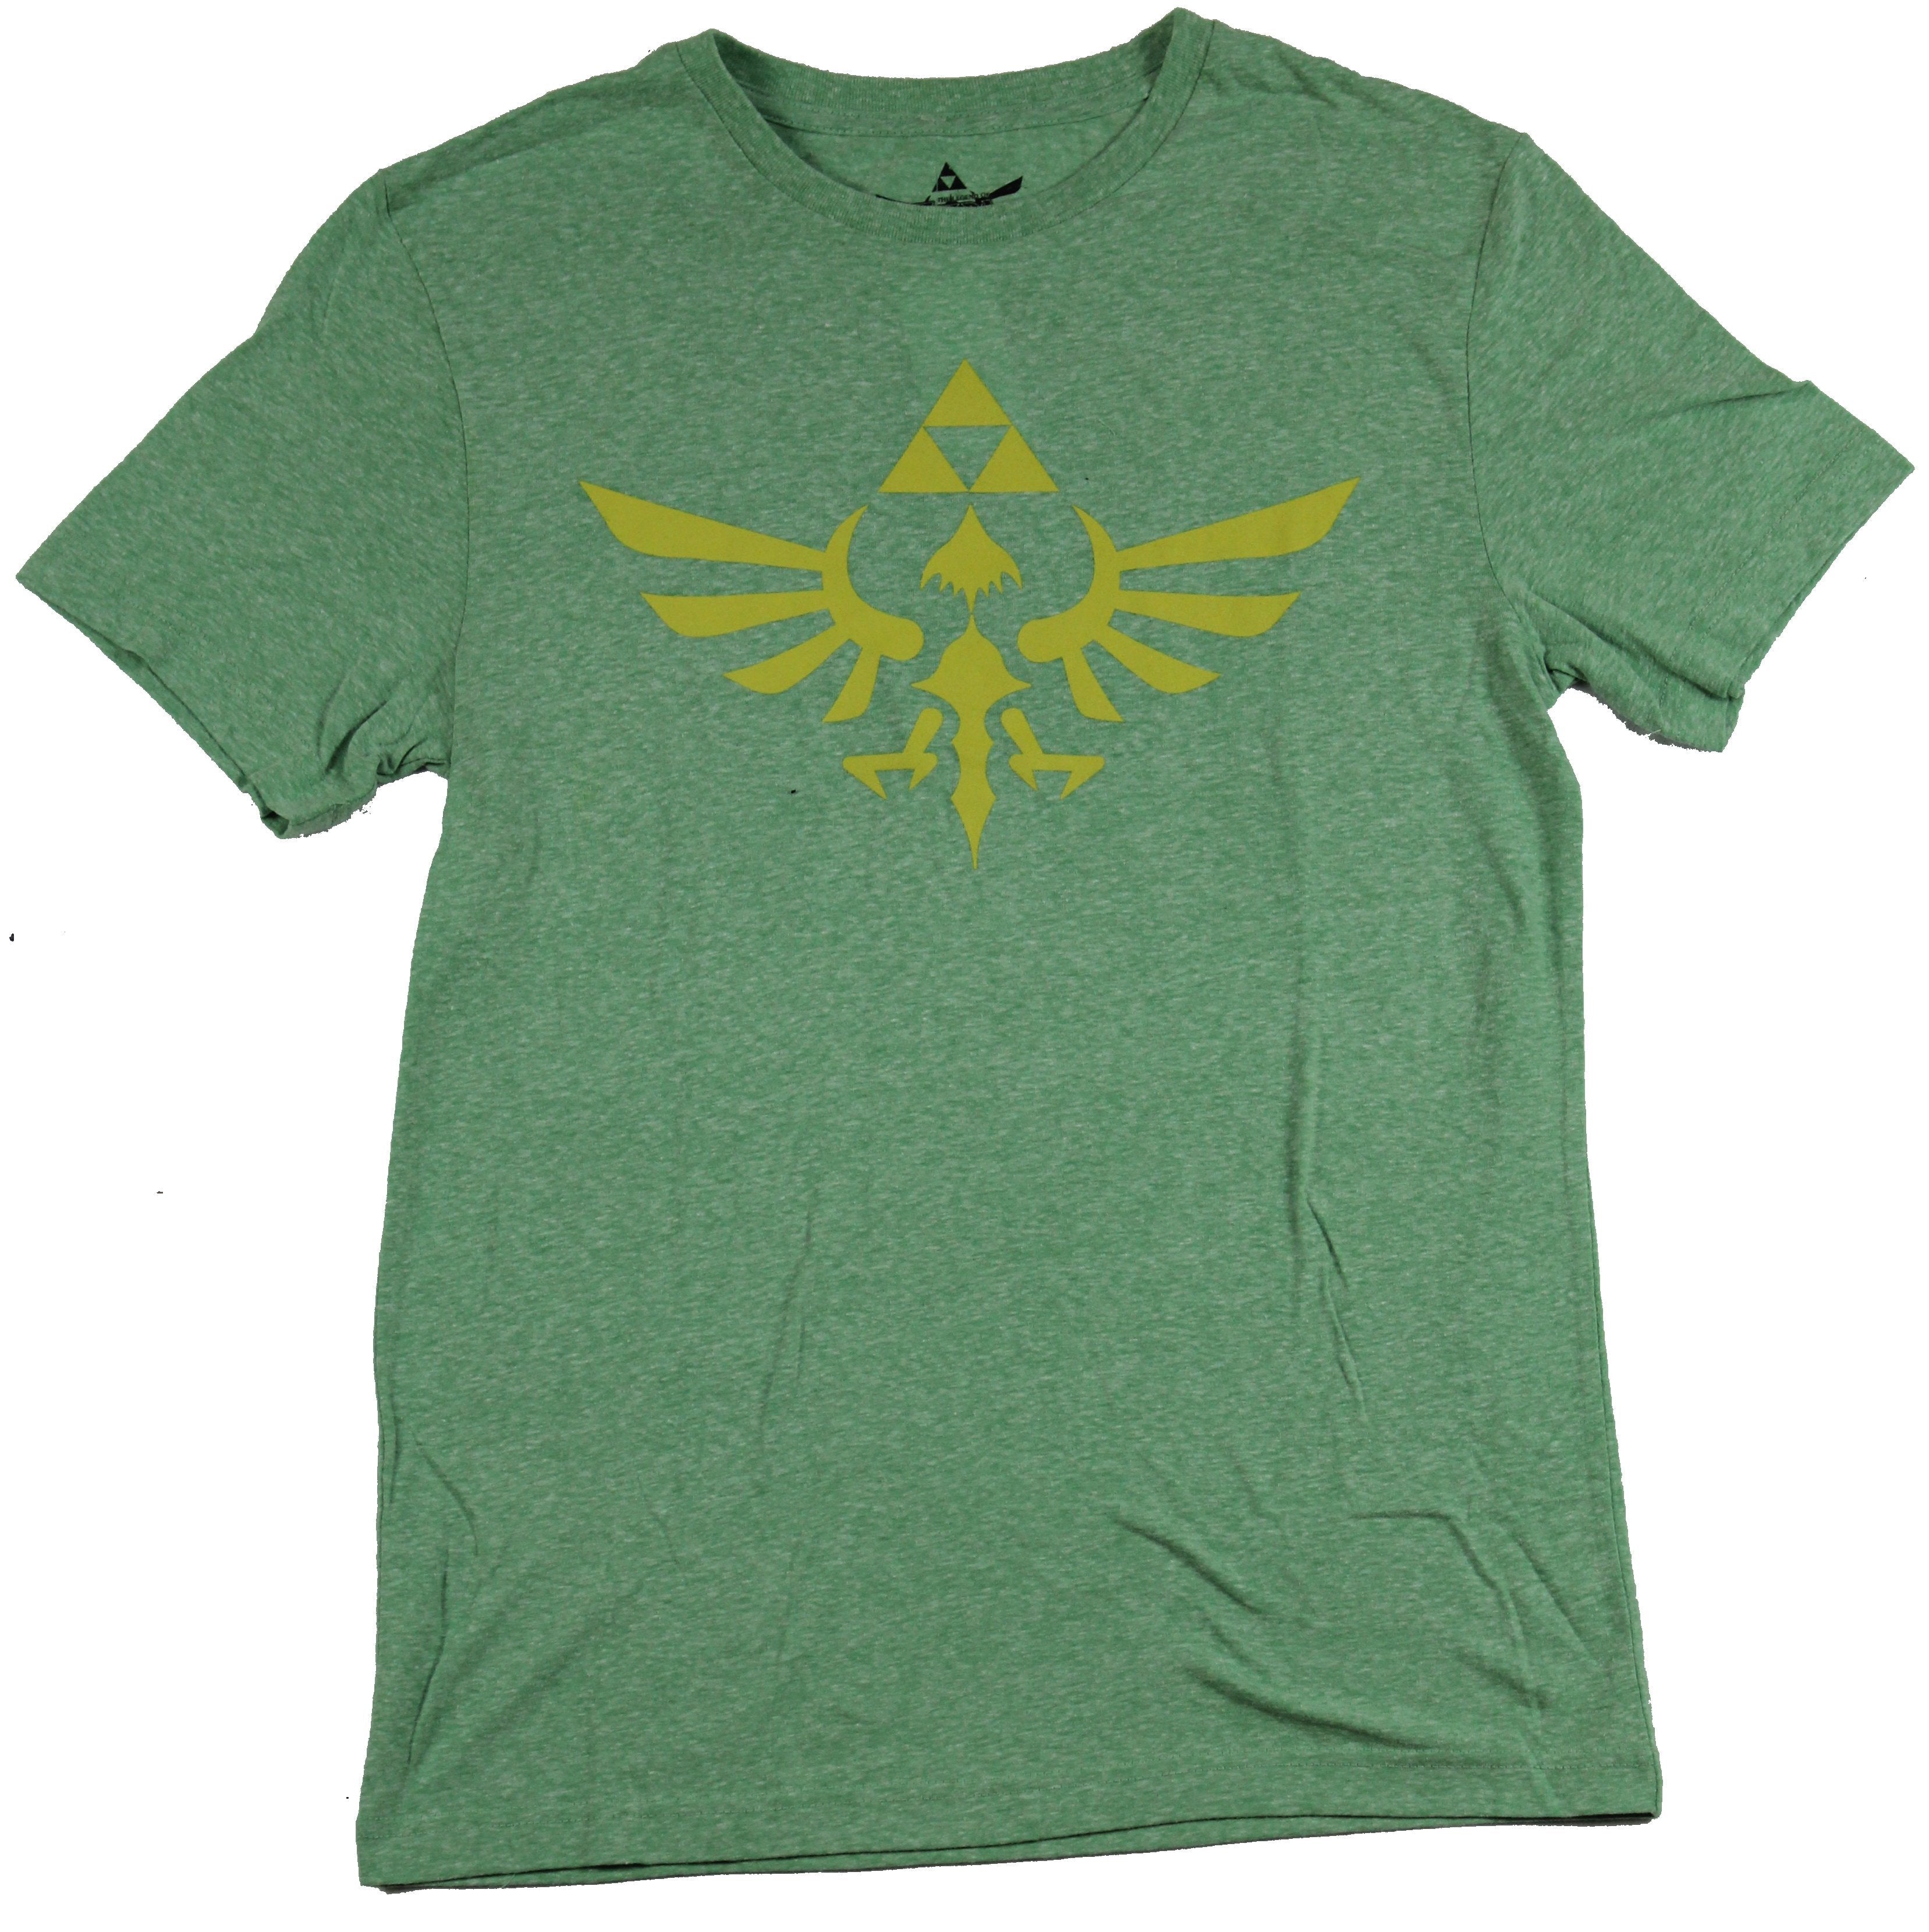 Legend of Zelda Mens T-Shirt - Classic Yellow Tri Force Logo